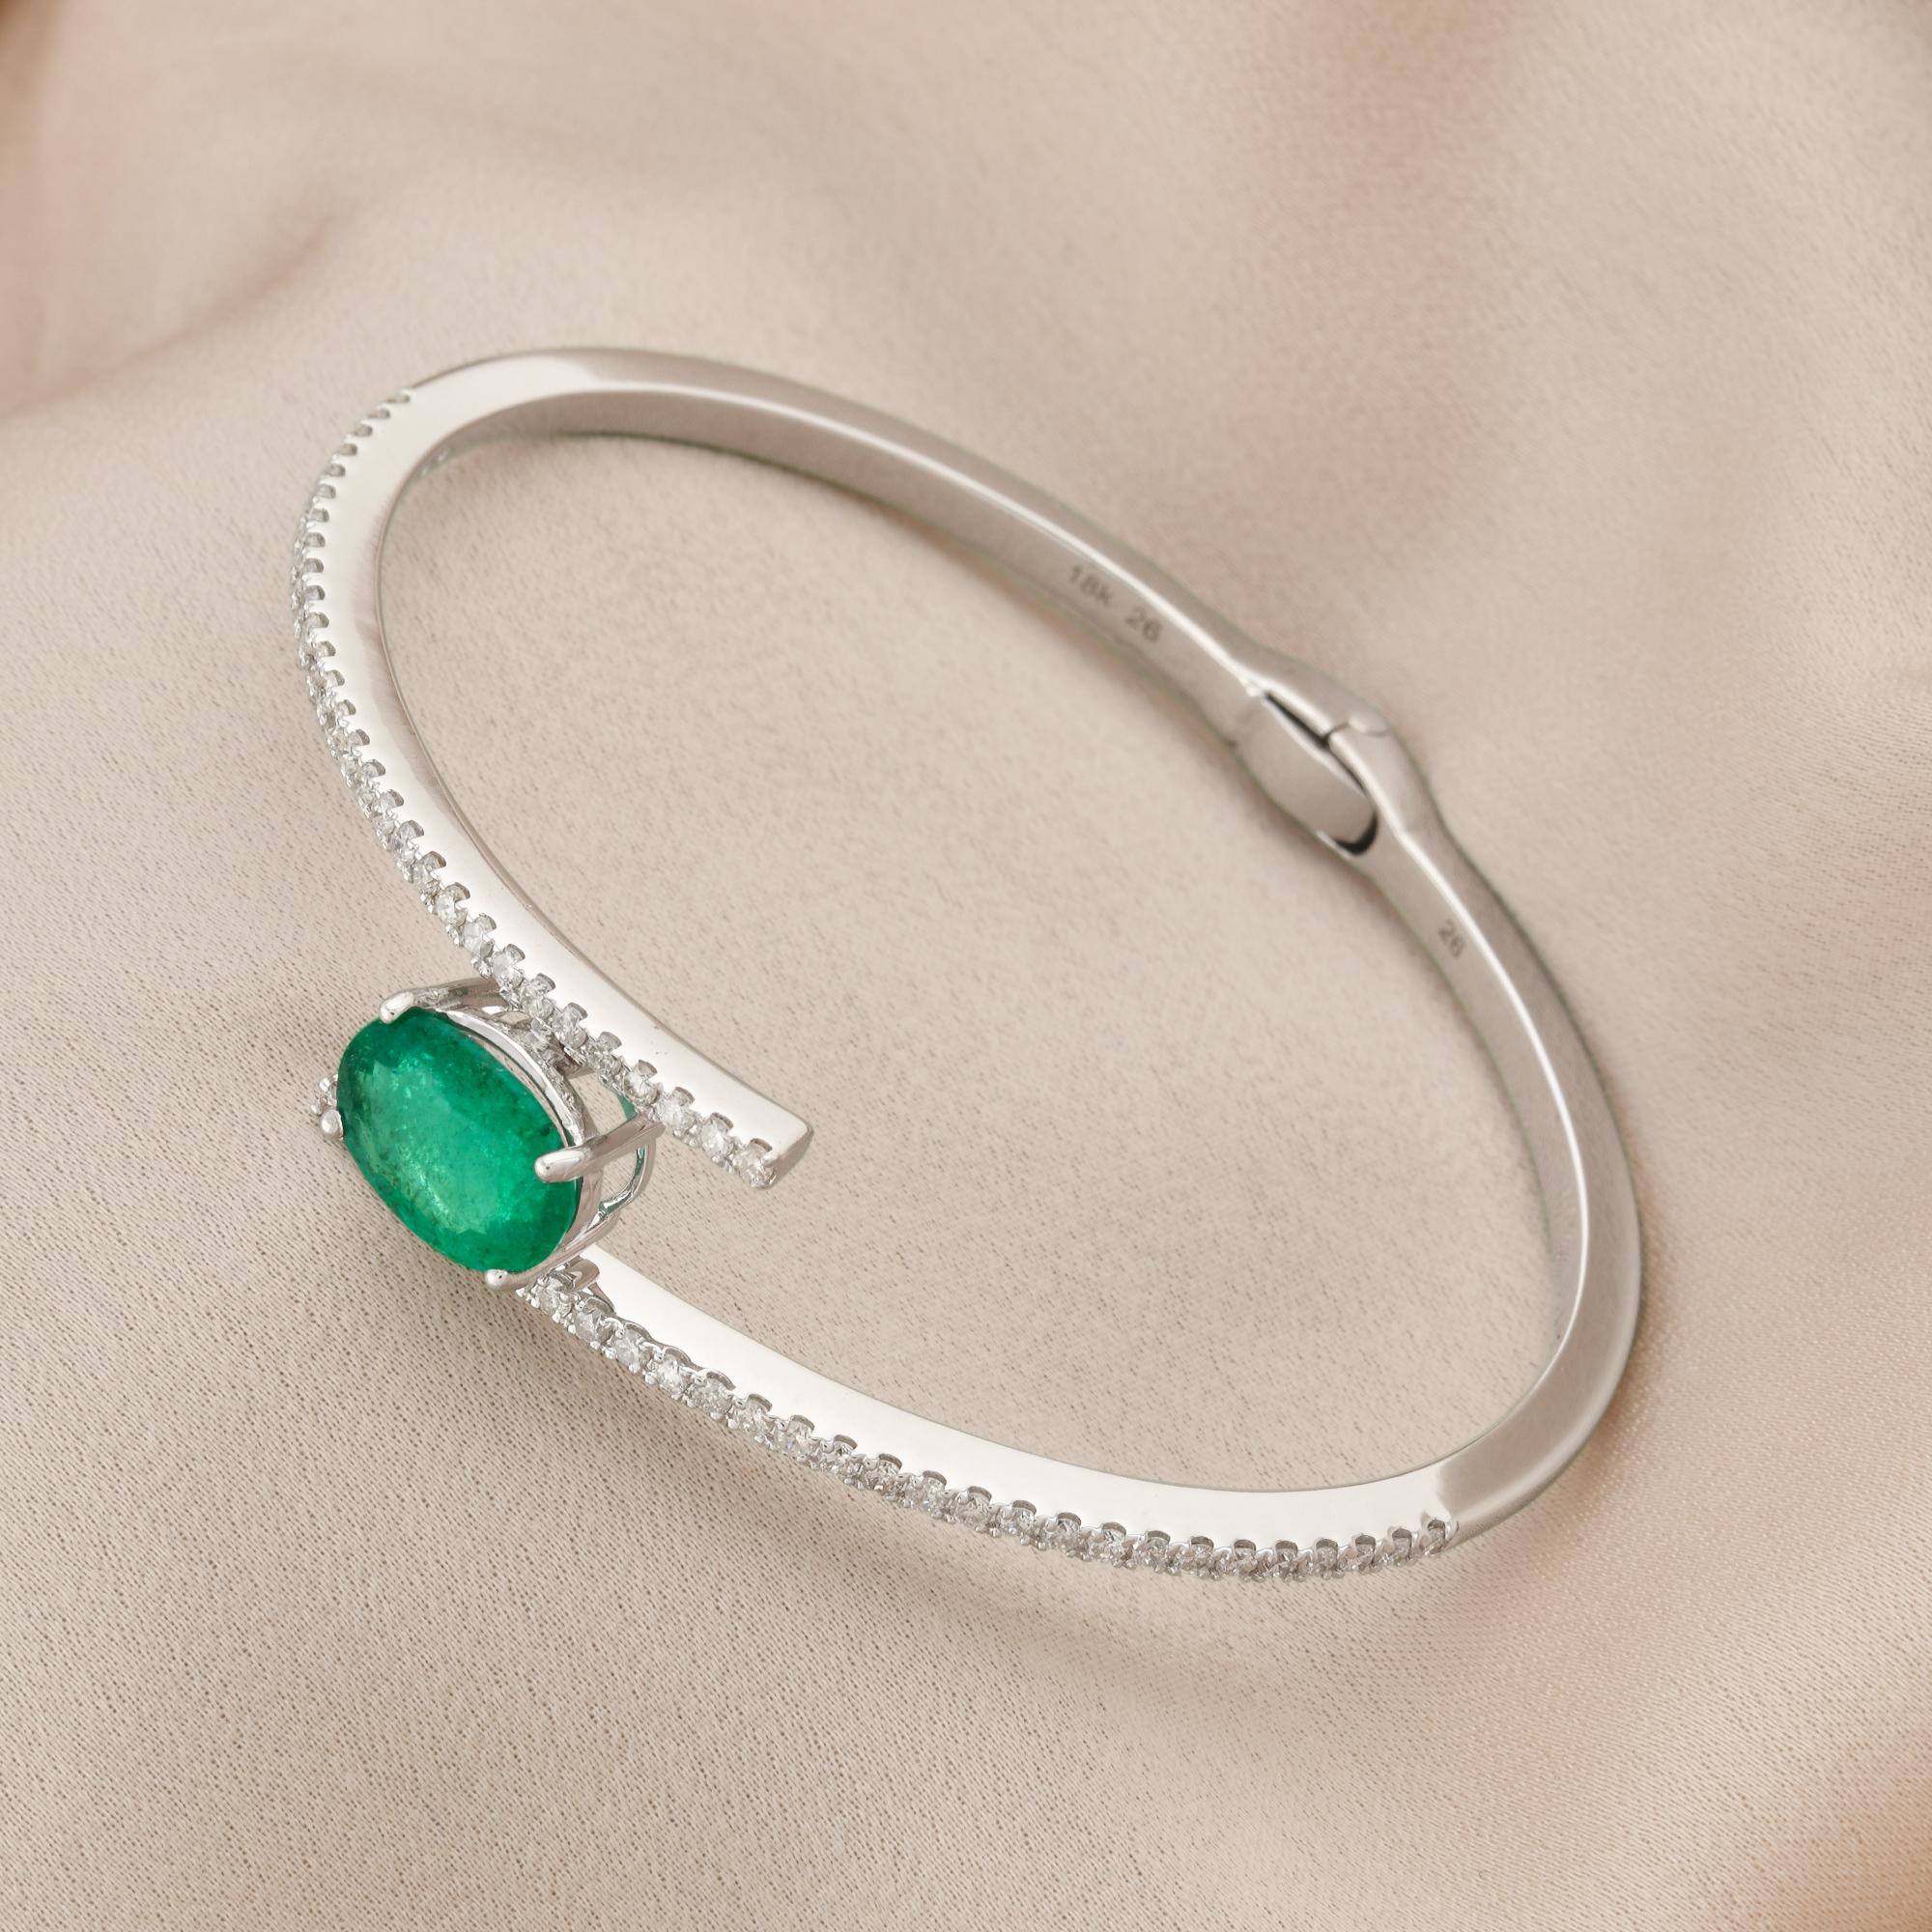 Oval Cut Oval Emerald Gemstone Bangle Bracelet Pave Diamond 14k White Gold Fine Jewelry For Sale